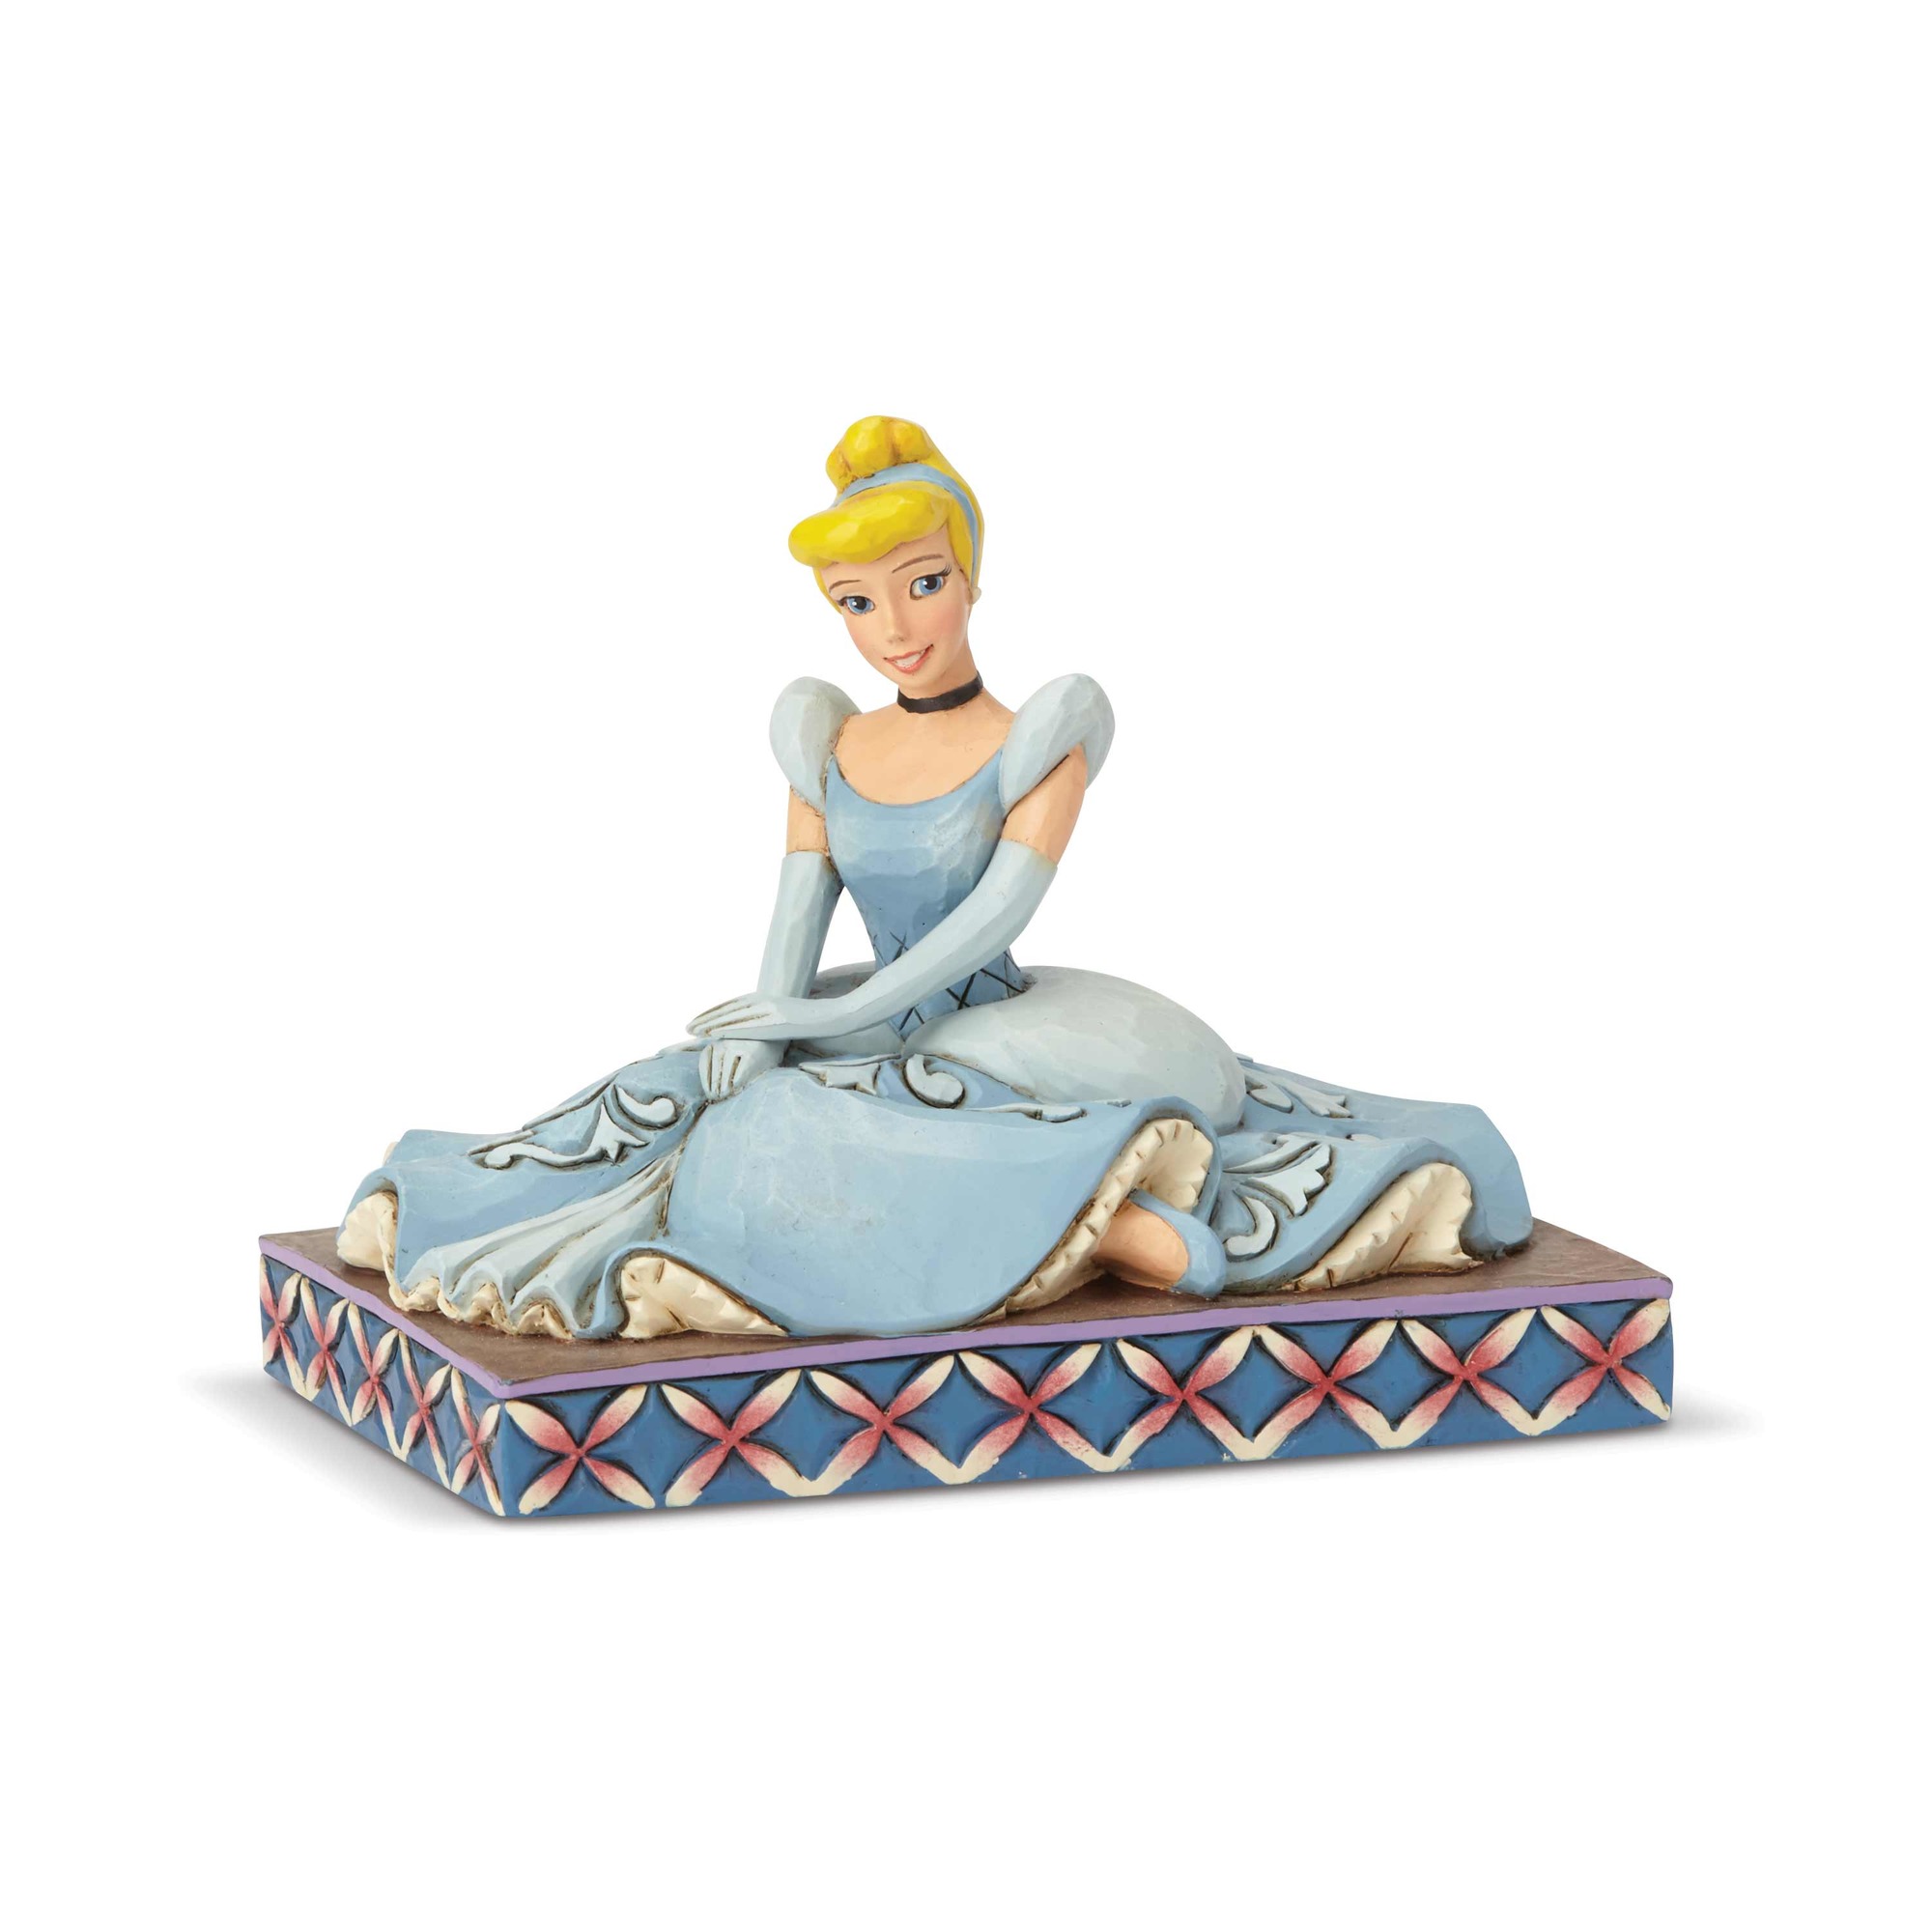 Disney Traditions Cinderella Personality Pose Figurine